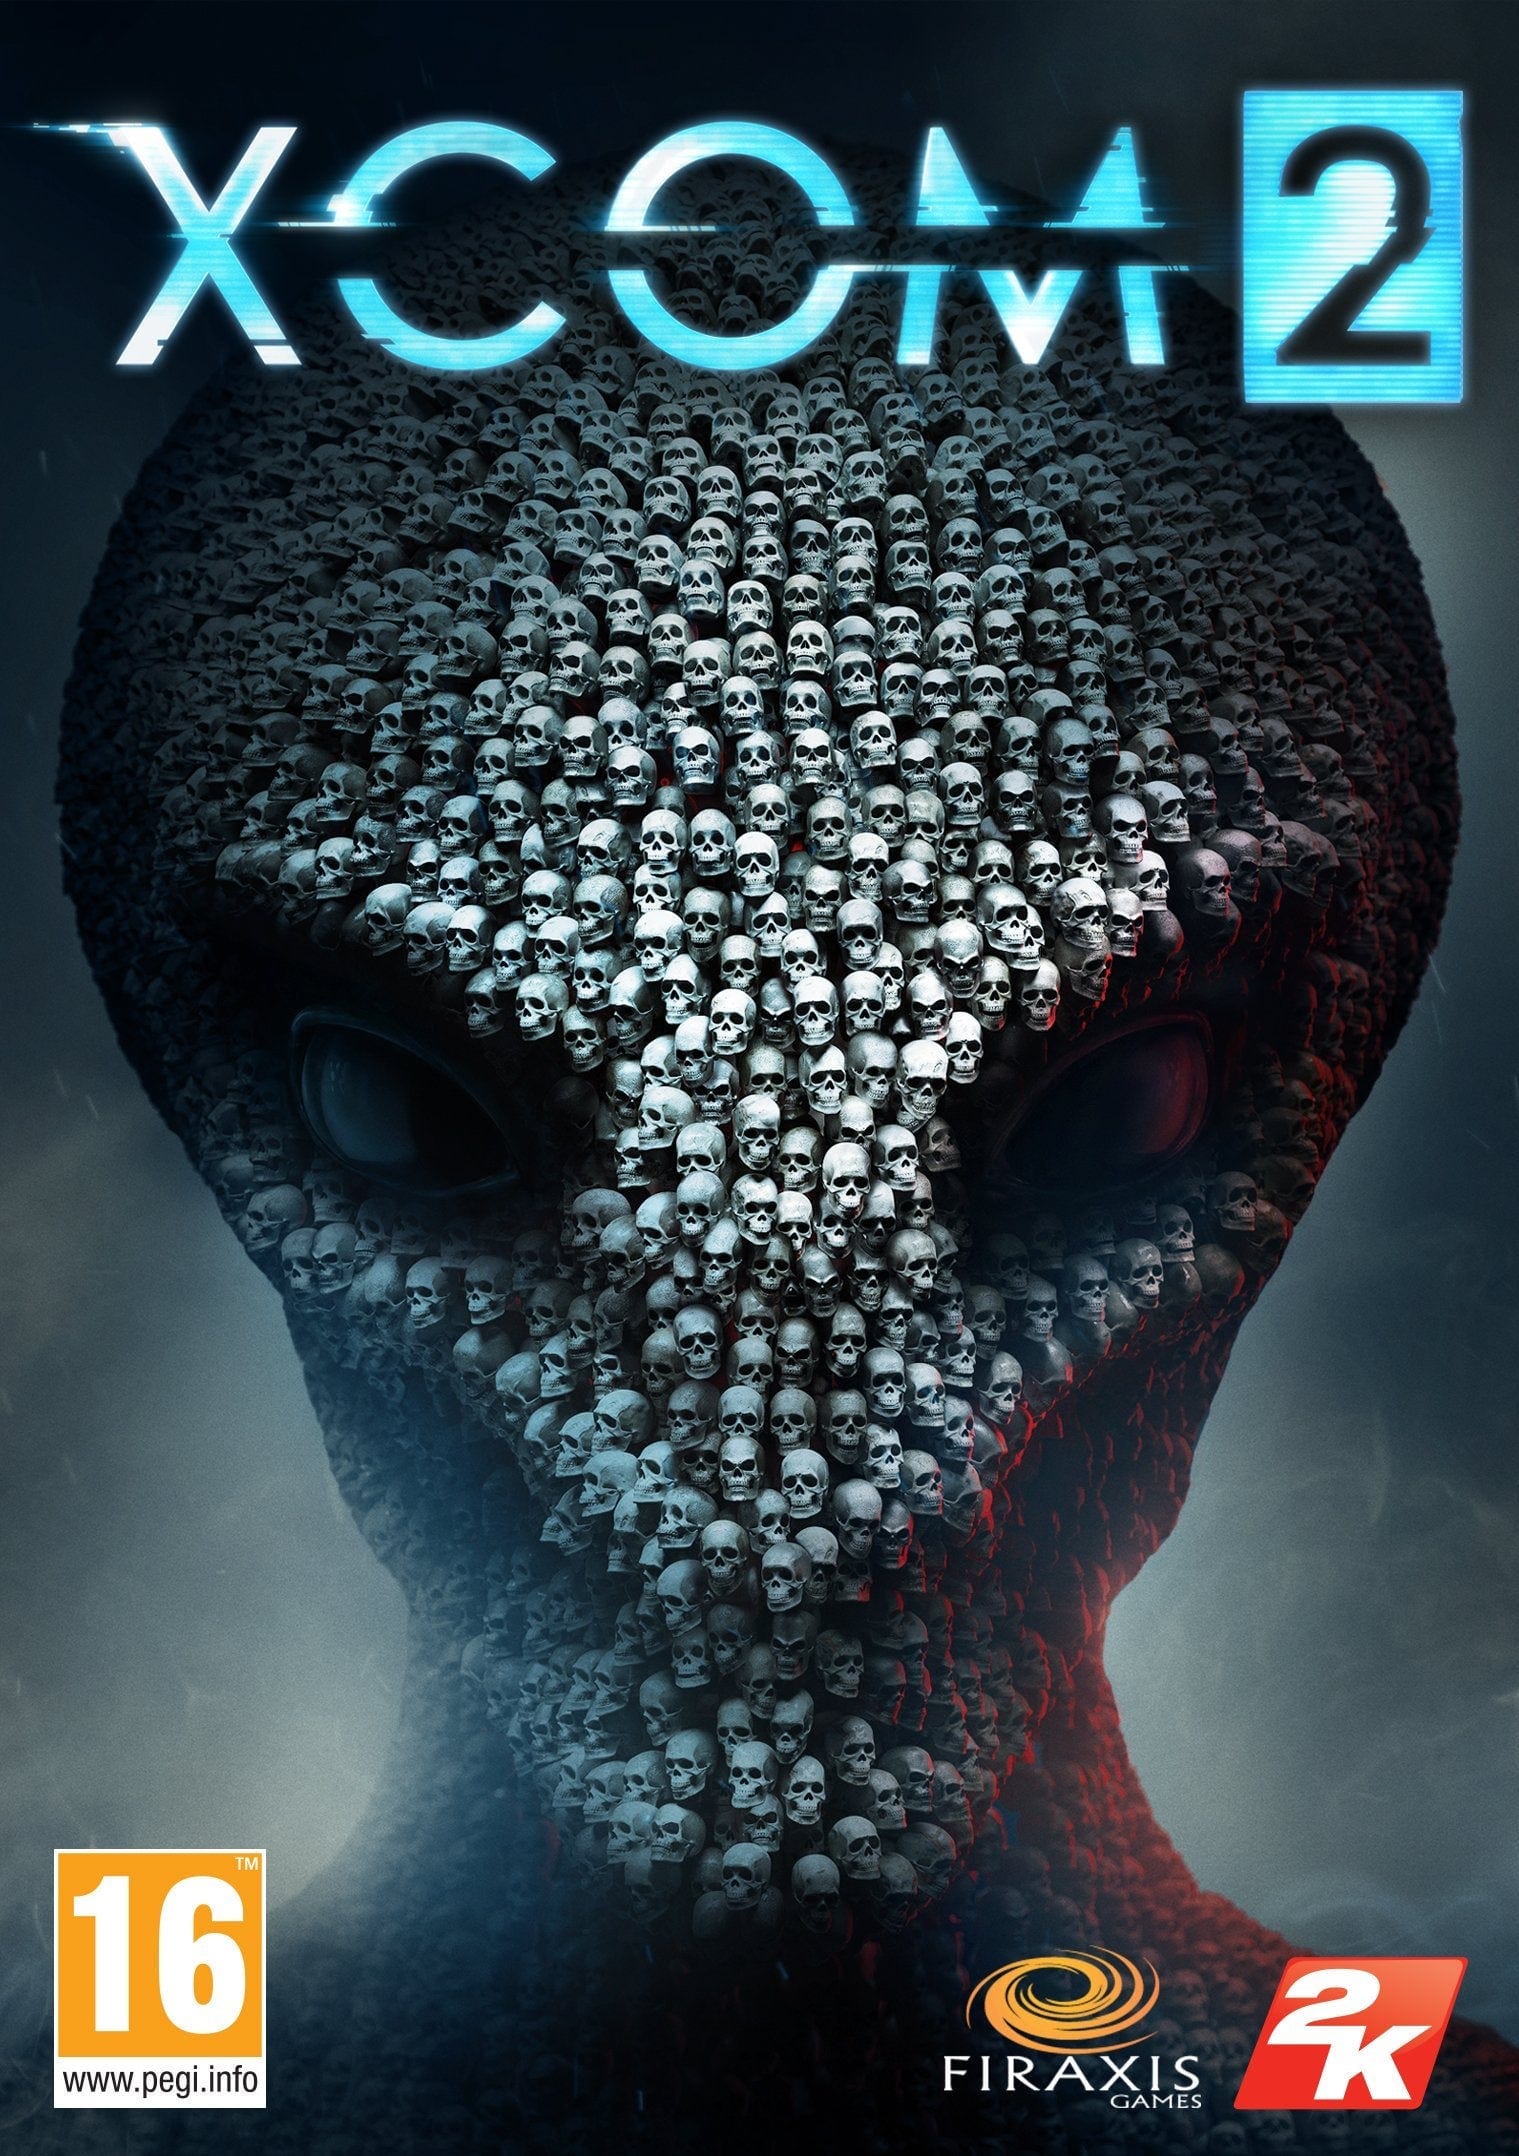 New XCOM cover art is creepy : r/gaming